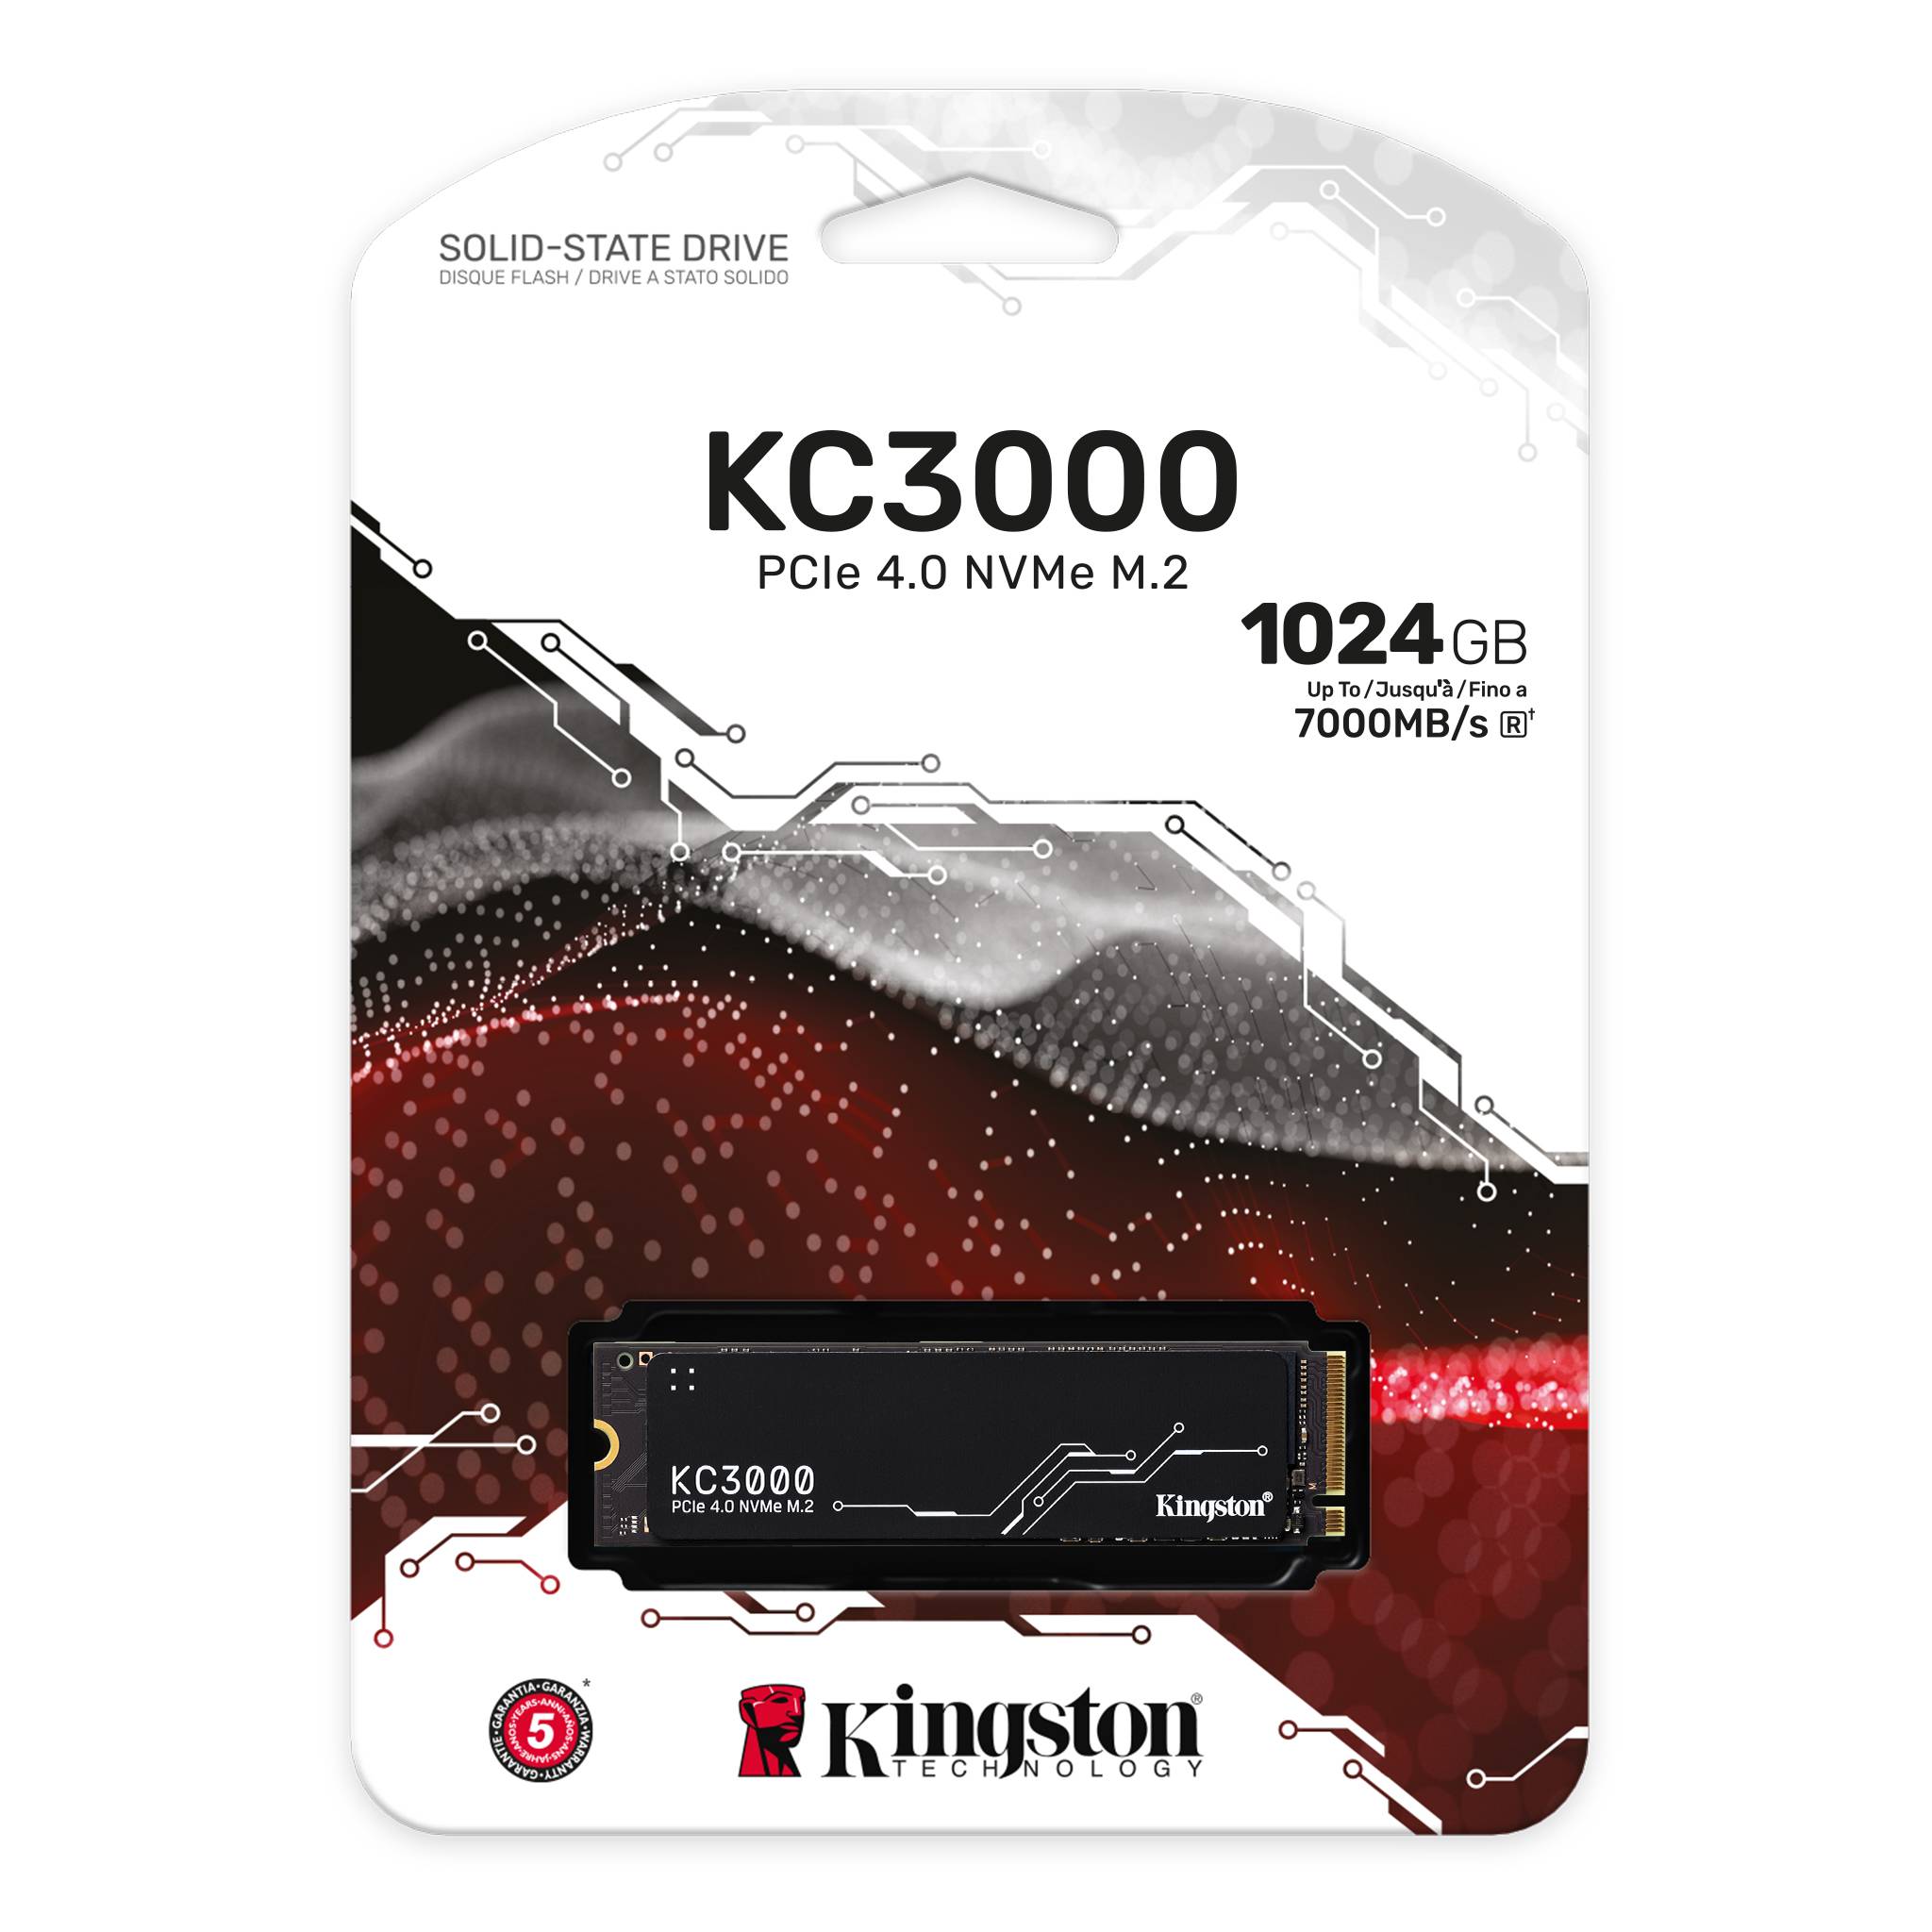 KC3000 PCIe 4.0 NVMe M.2 SSD Alto para computadoras de y portátiles Kingston Technology